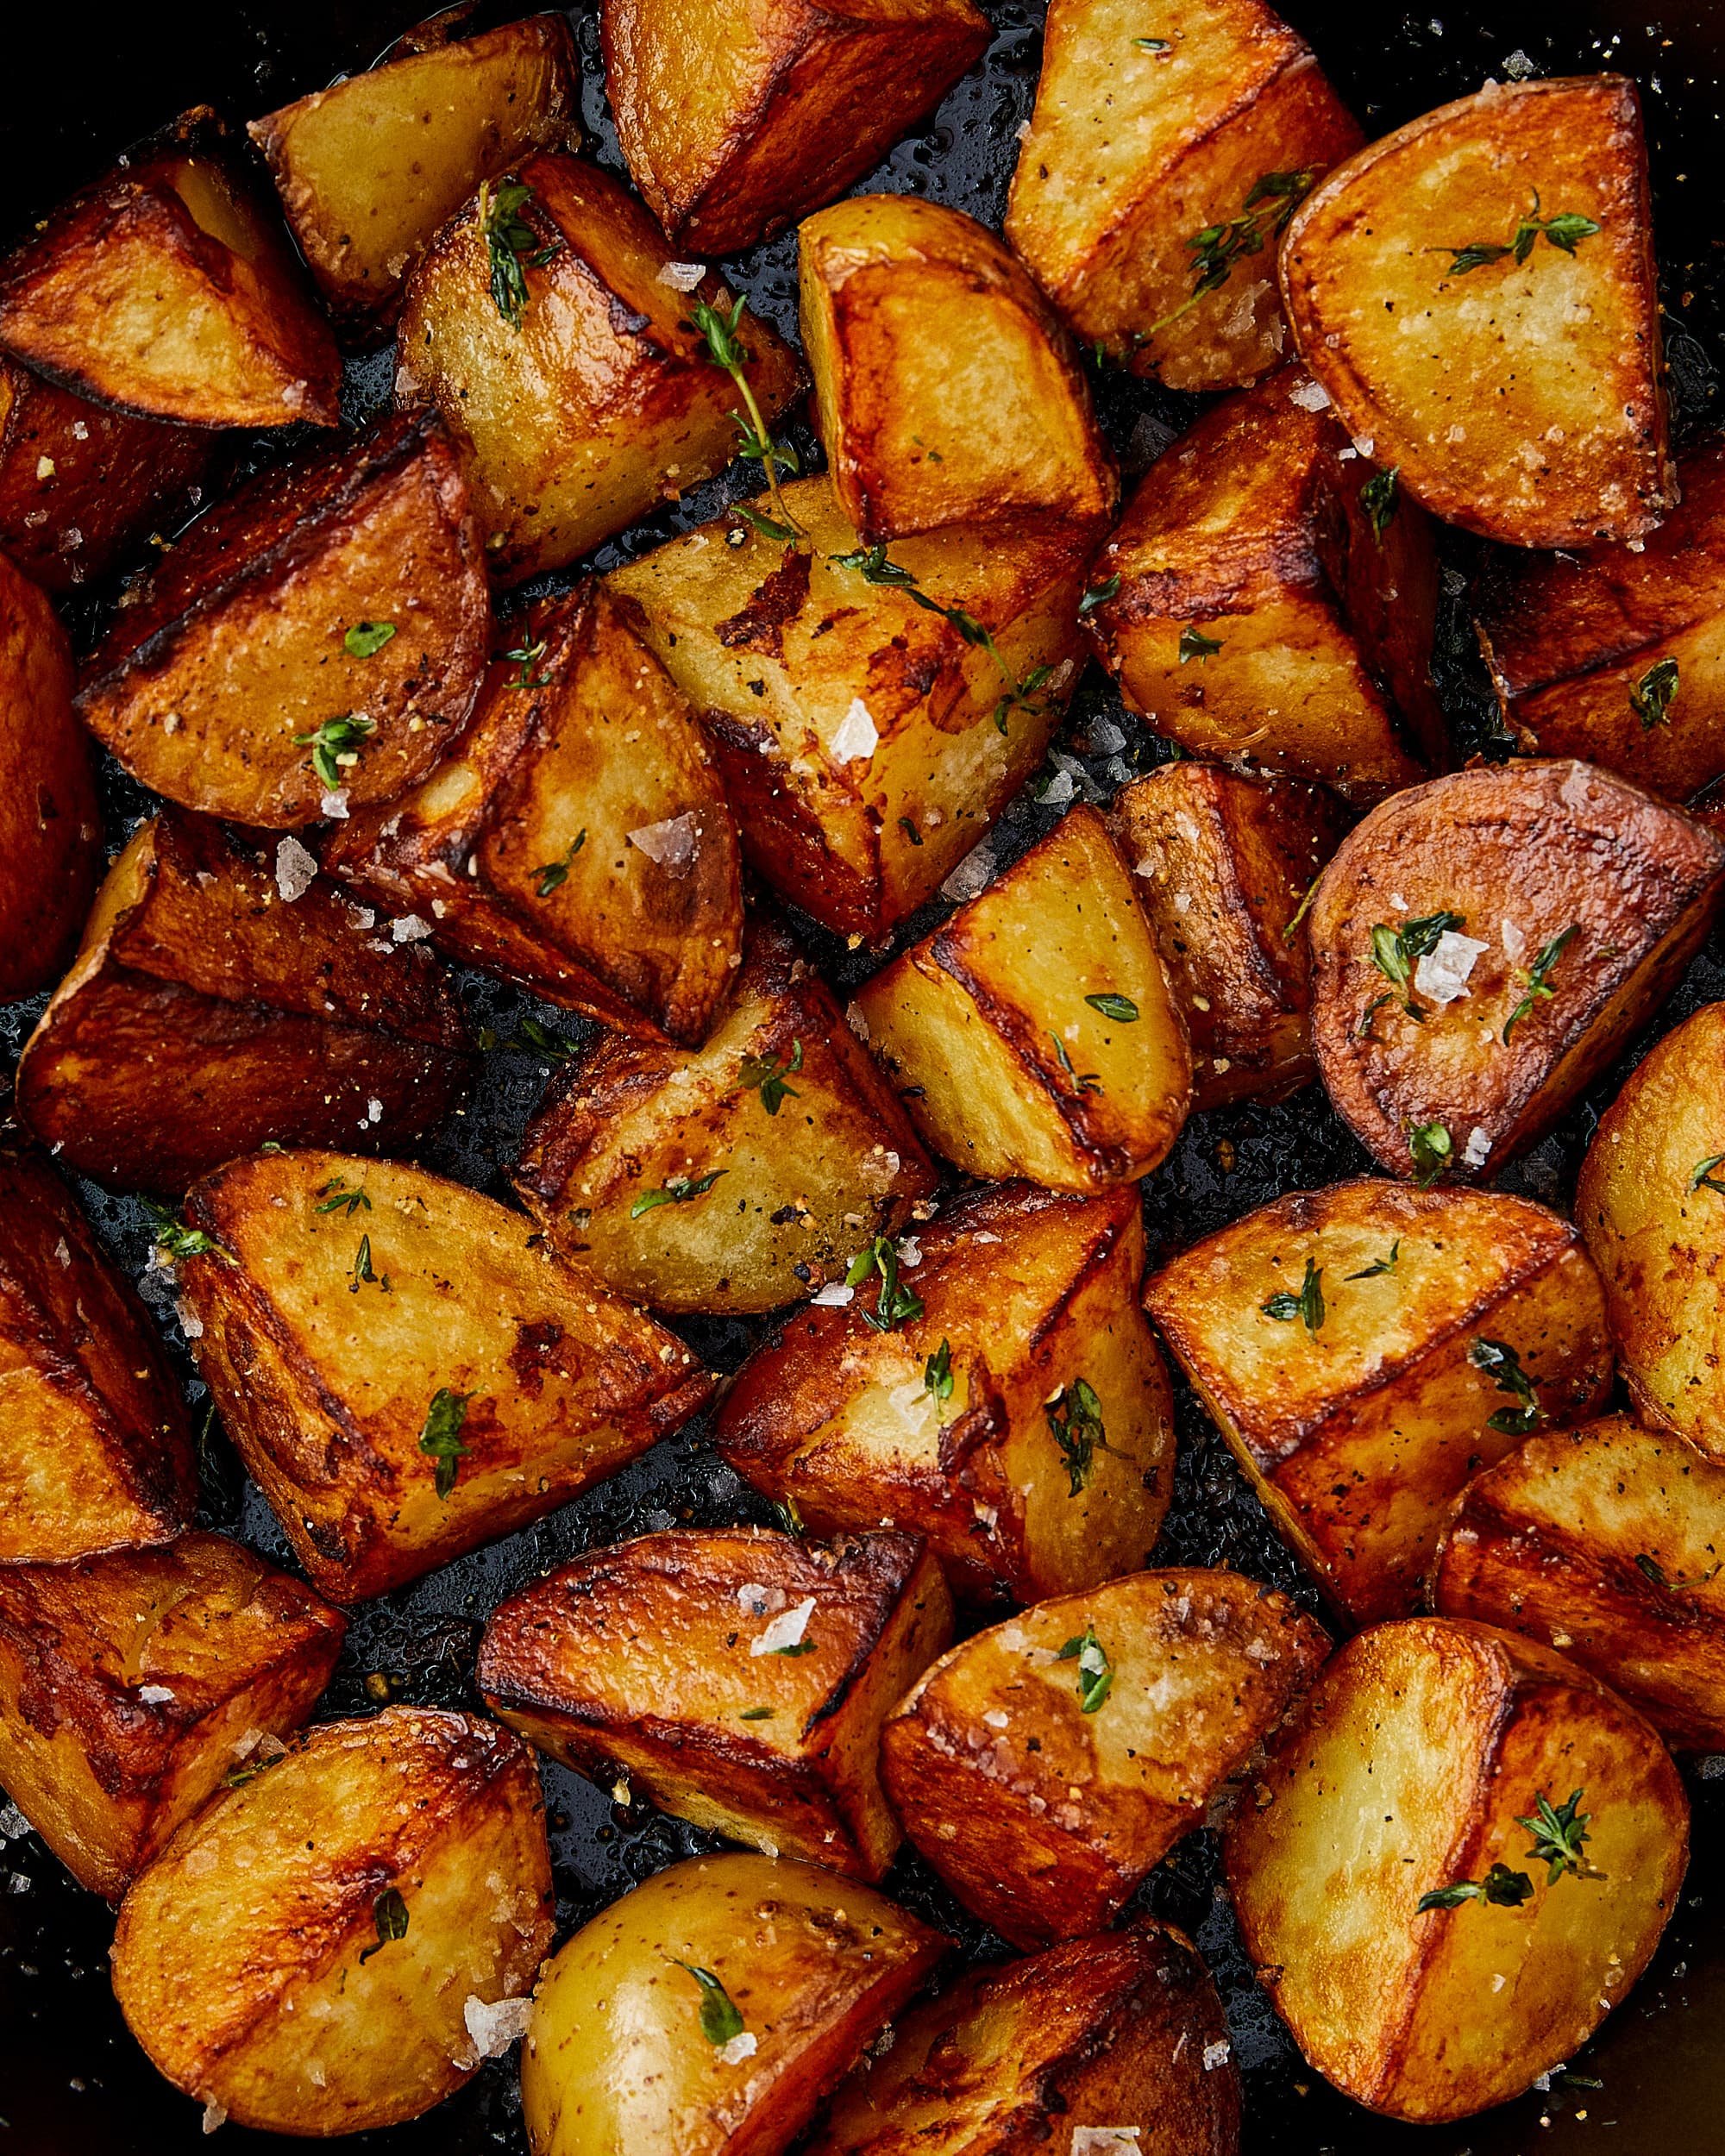 https://cdn.apartmenttherapy.info/image/upload/v1601667310/k/Photo/Recipes/2020-10-Crispy-Skillet-Fried-Potatoes/kitchn-crispy-skillet-fried-potatoes-2.jpg